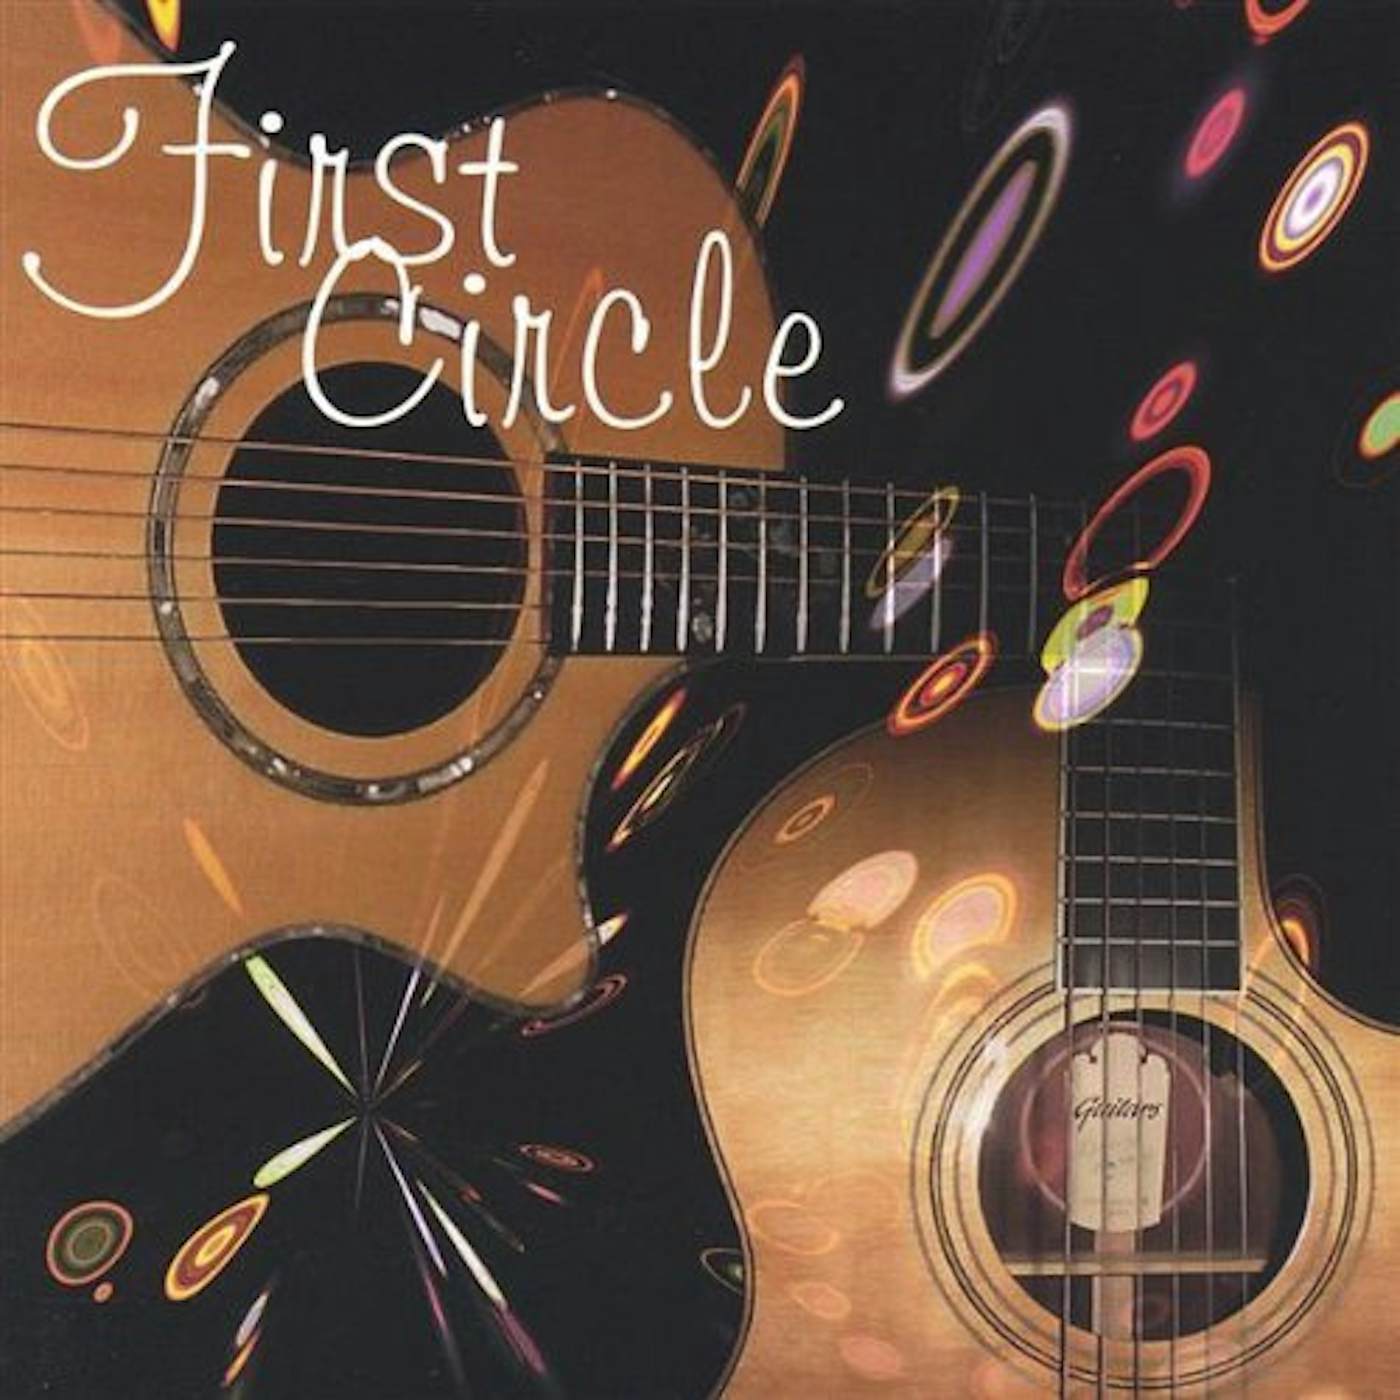 FIRST CIRCLE CD